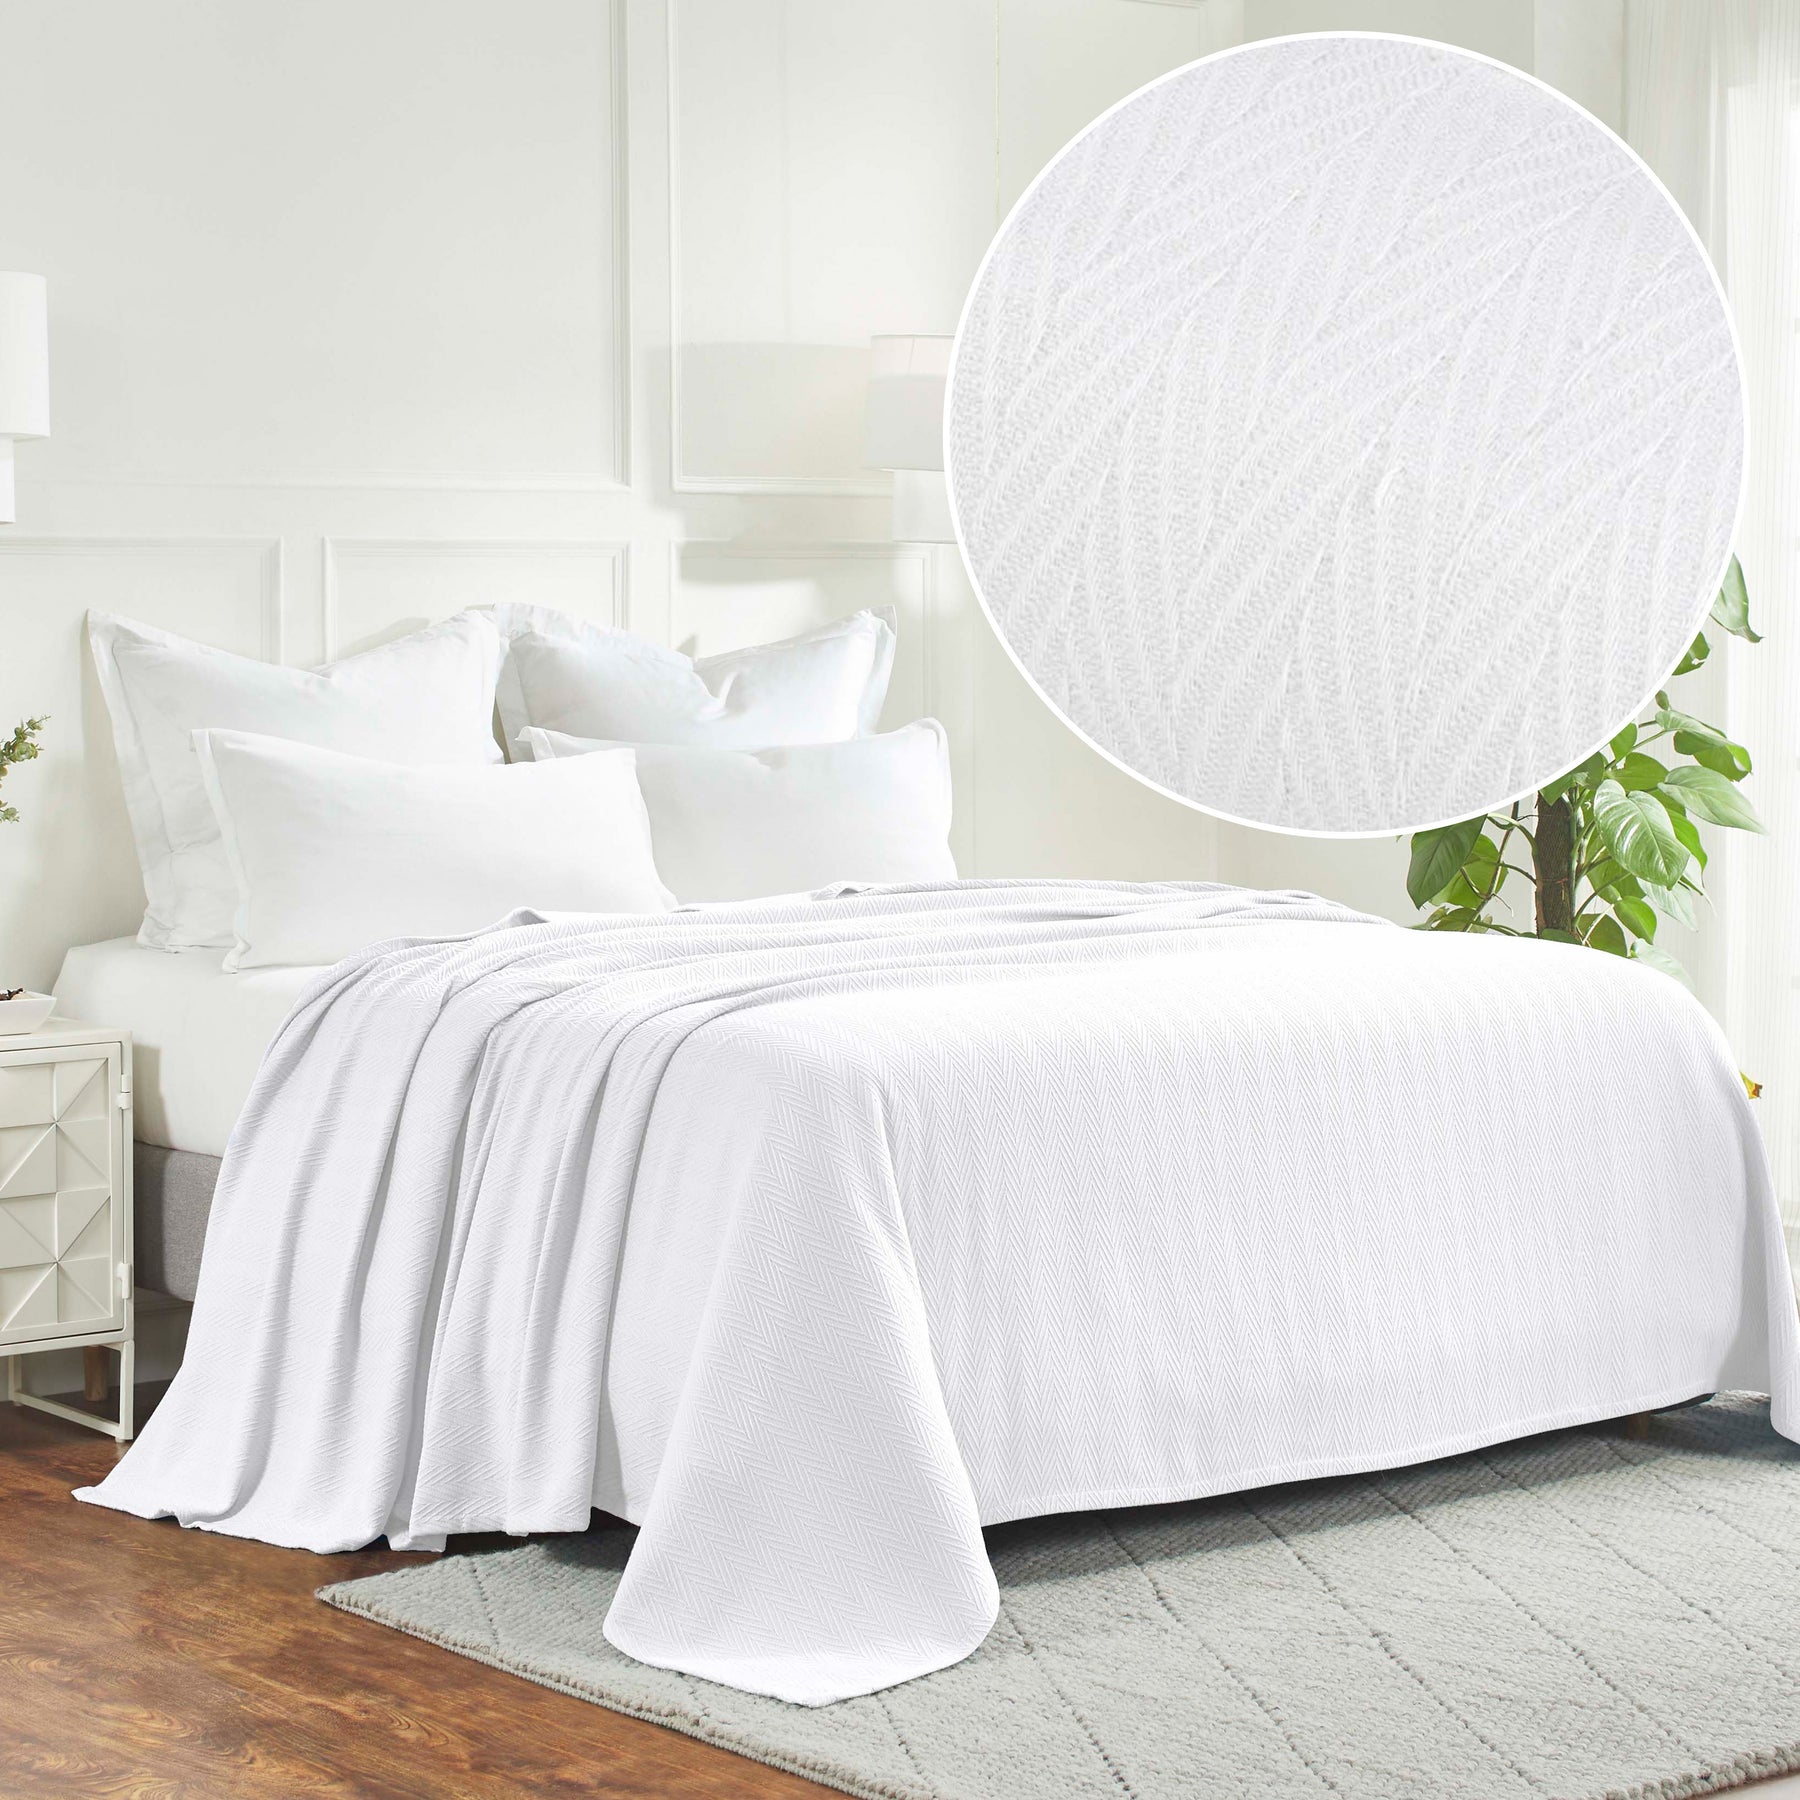 Herringbone All-Season Woven Cotton Blanket - White